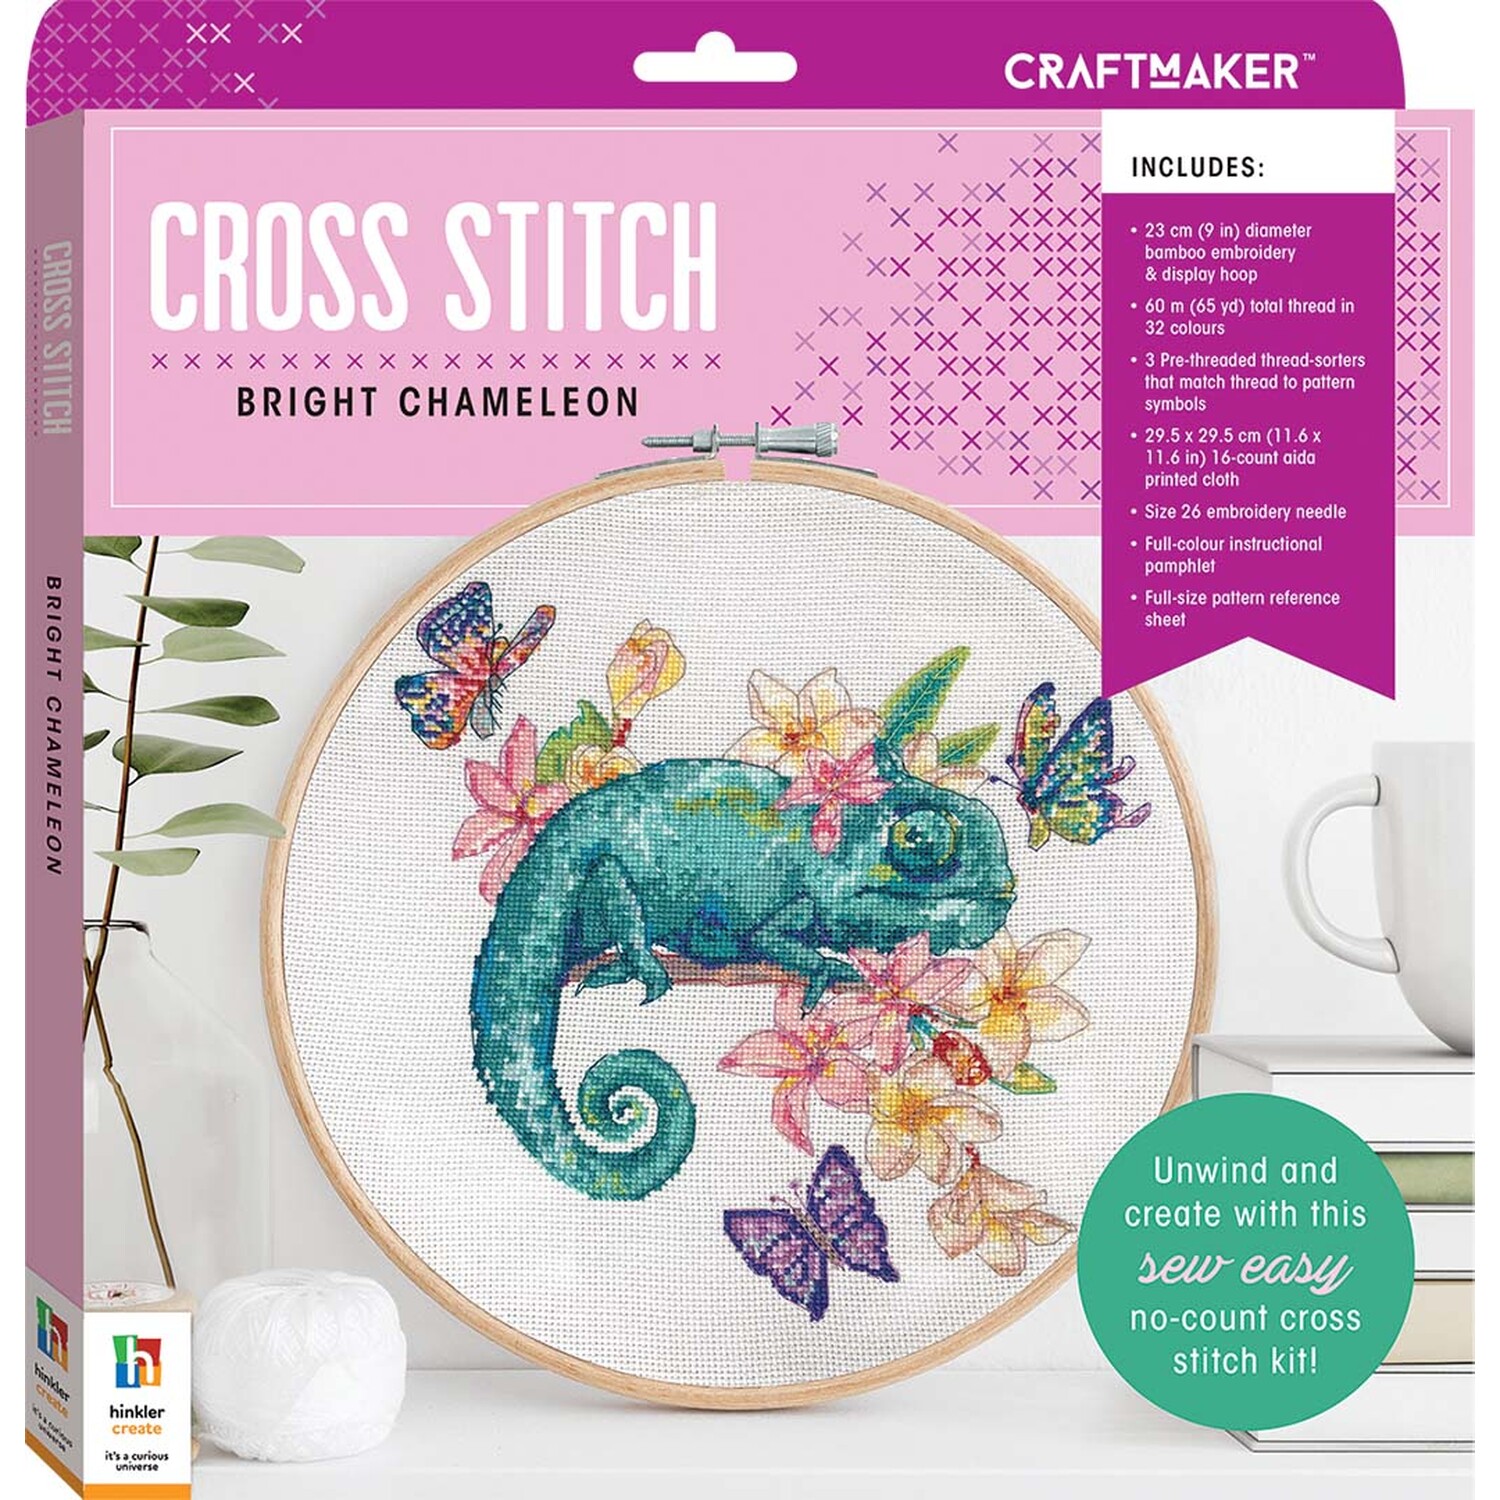 Craftmaker Cross Stitch Kit - Bright Chameleon Image